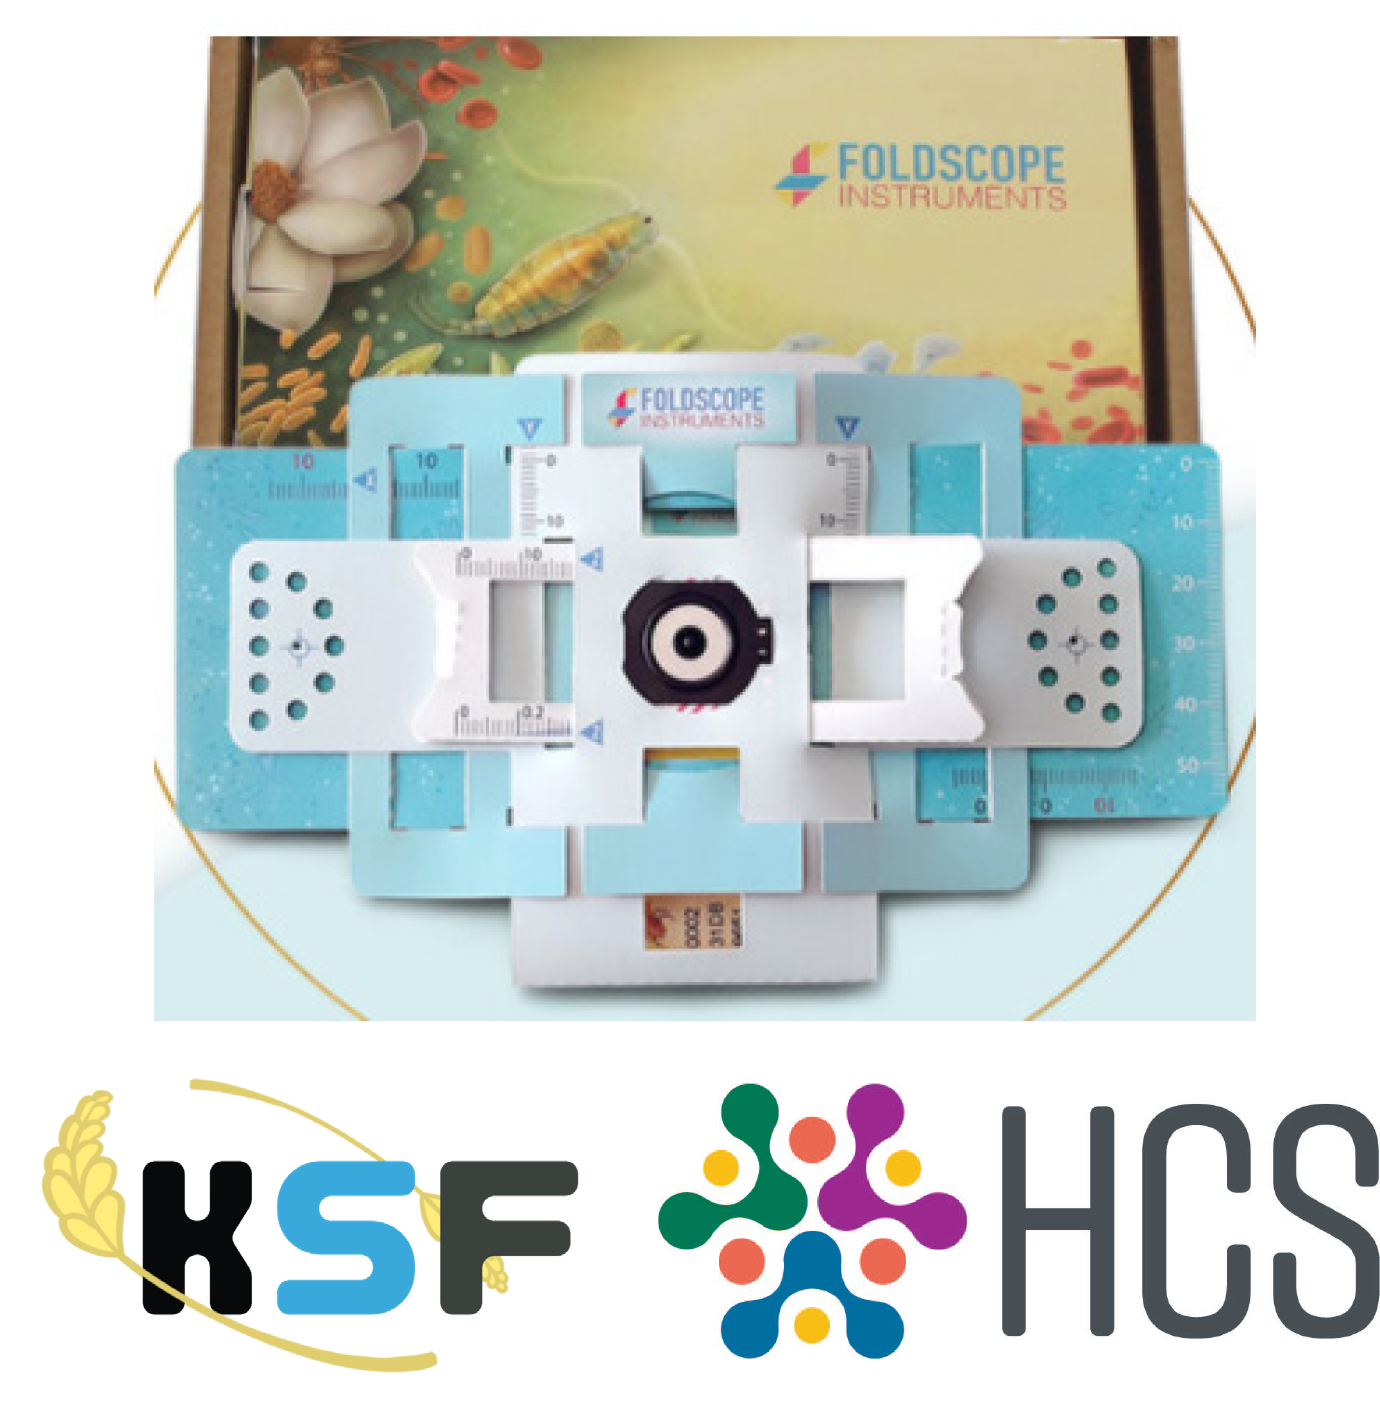 Foldscope photo with KSF and HCS logos